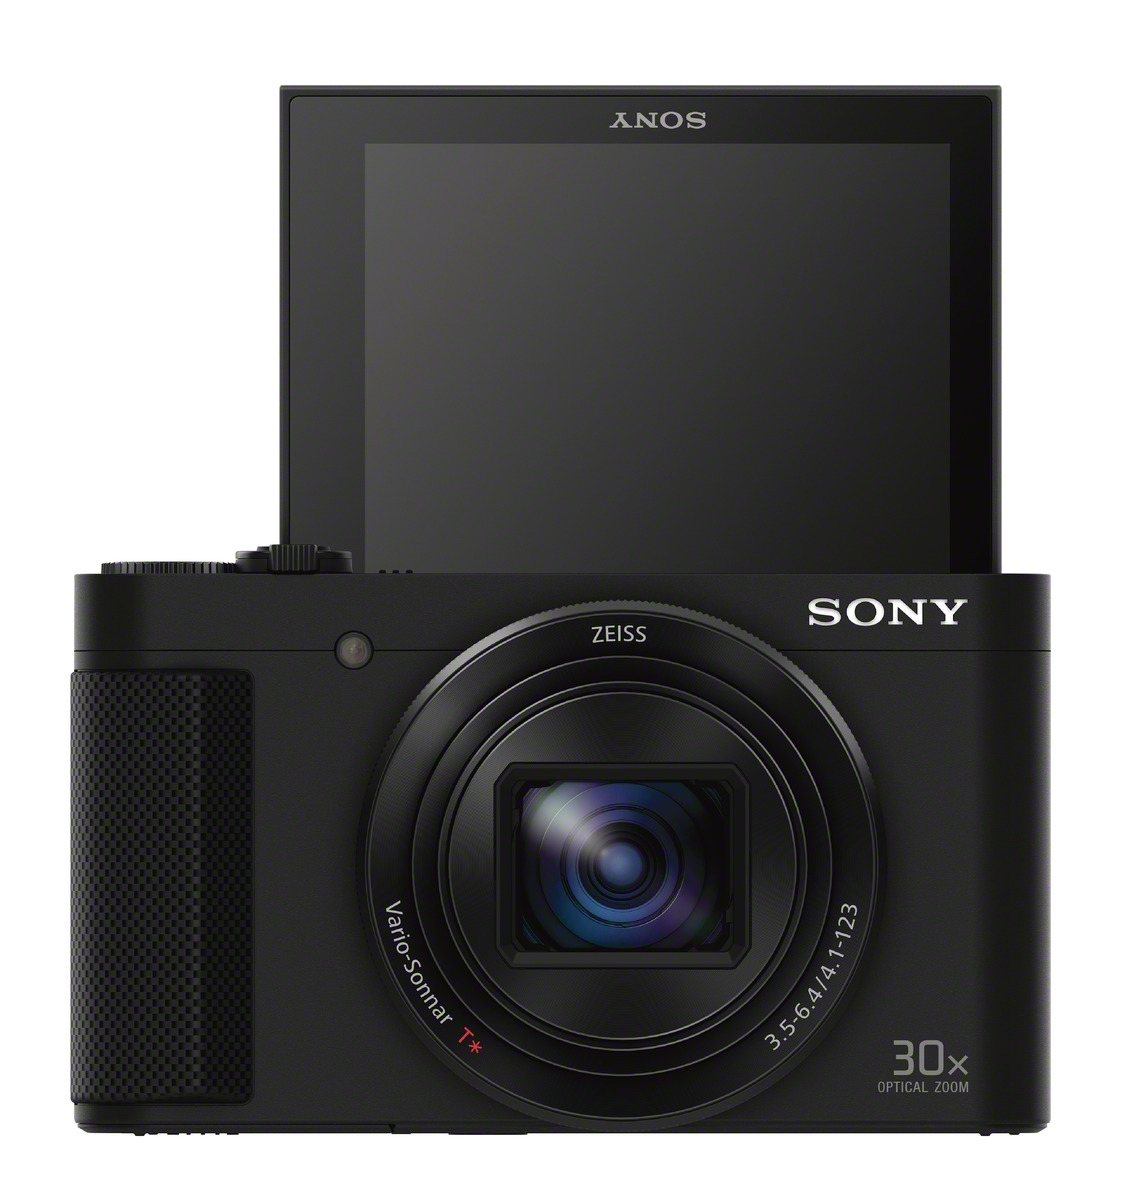 Xtra Fine, WLAN Cyber-shot Digitalkamera Zoom, , NFC TFT-LCD, 30x SONY Schwarz, opt. DSC-HX90 Zeiss